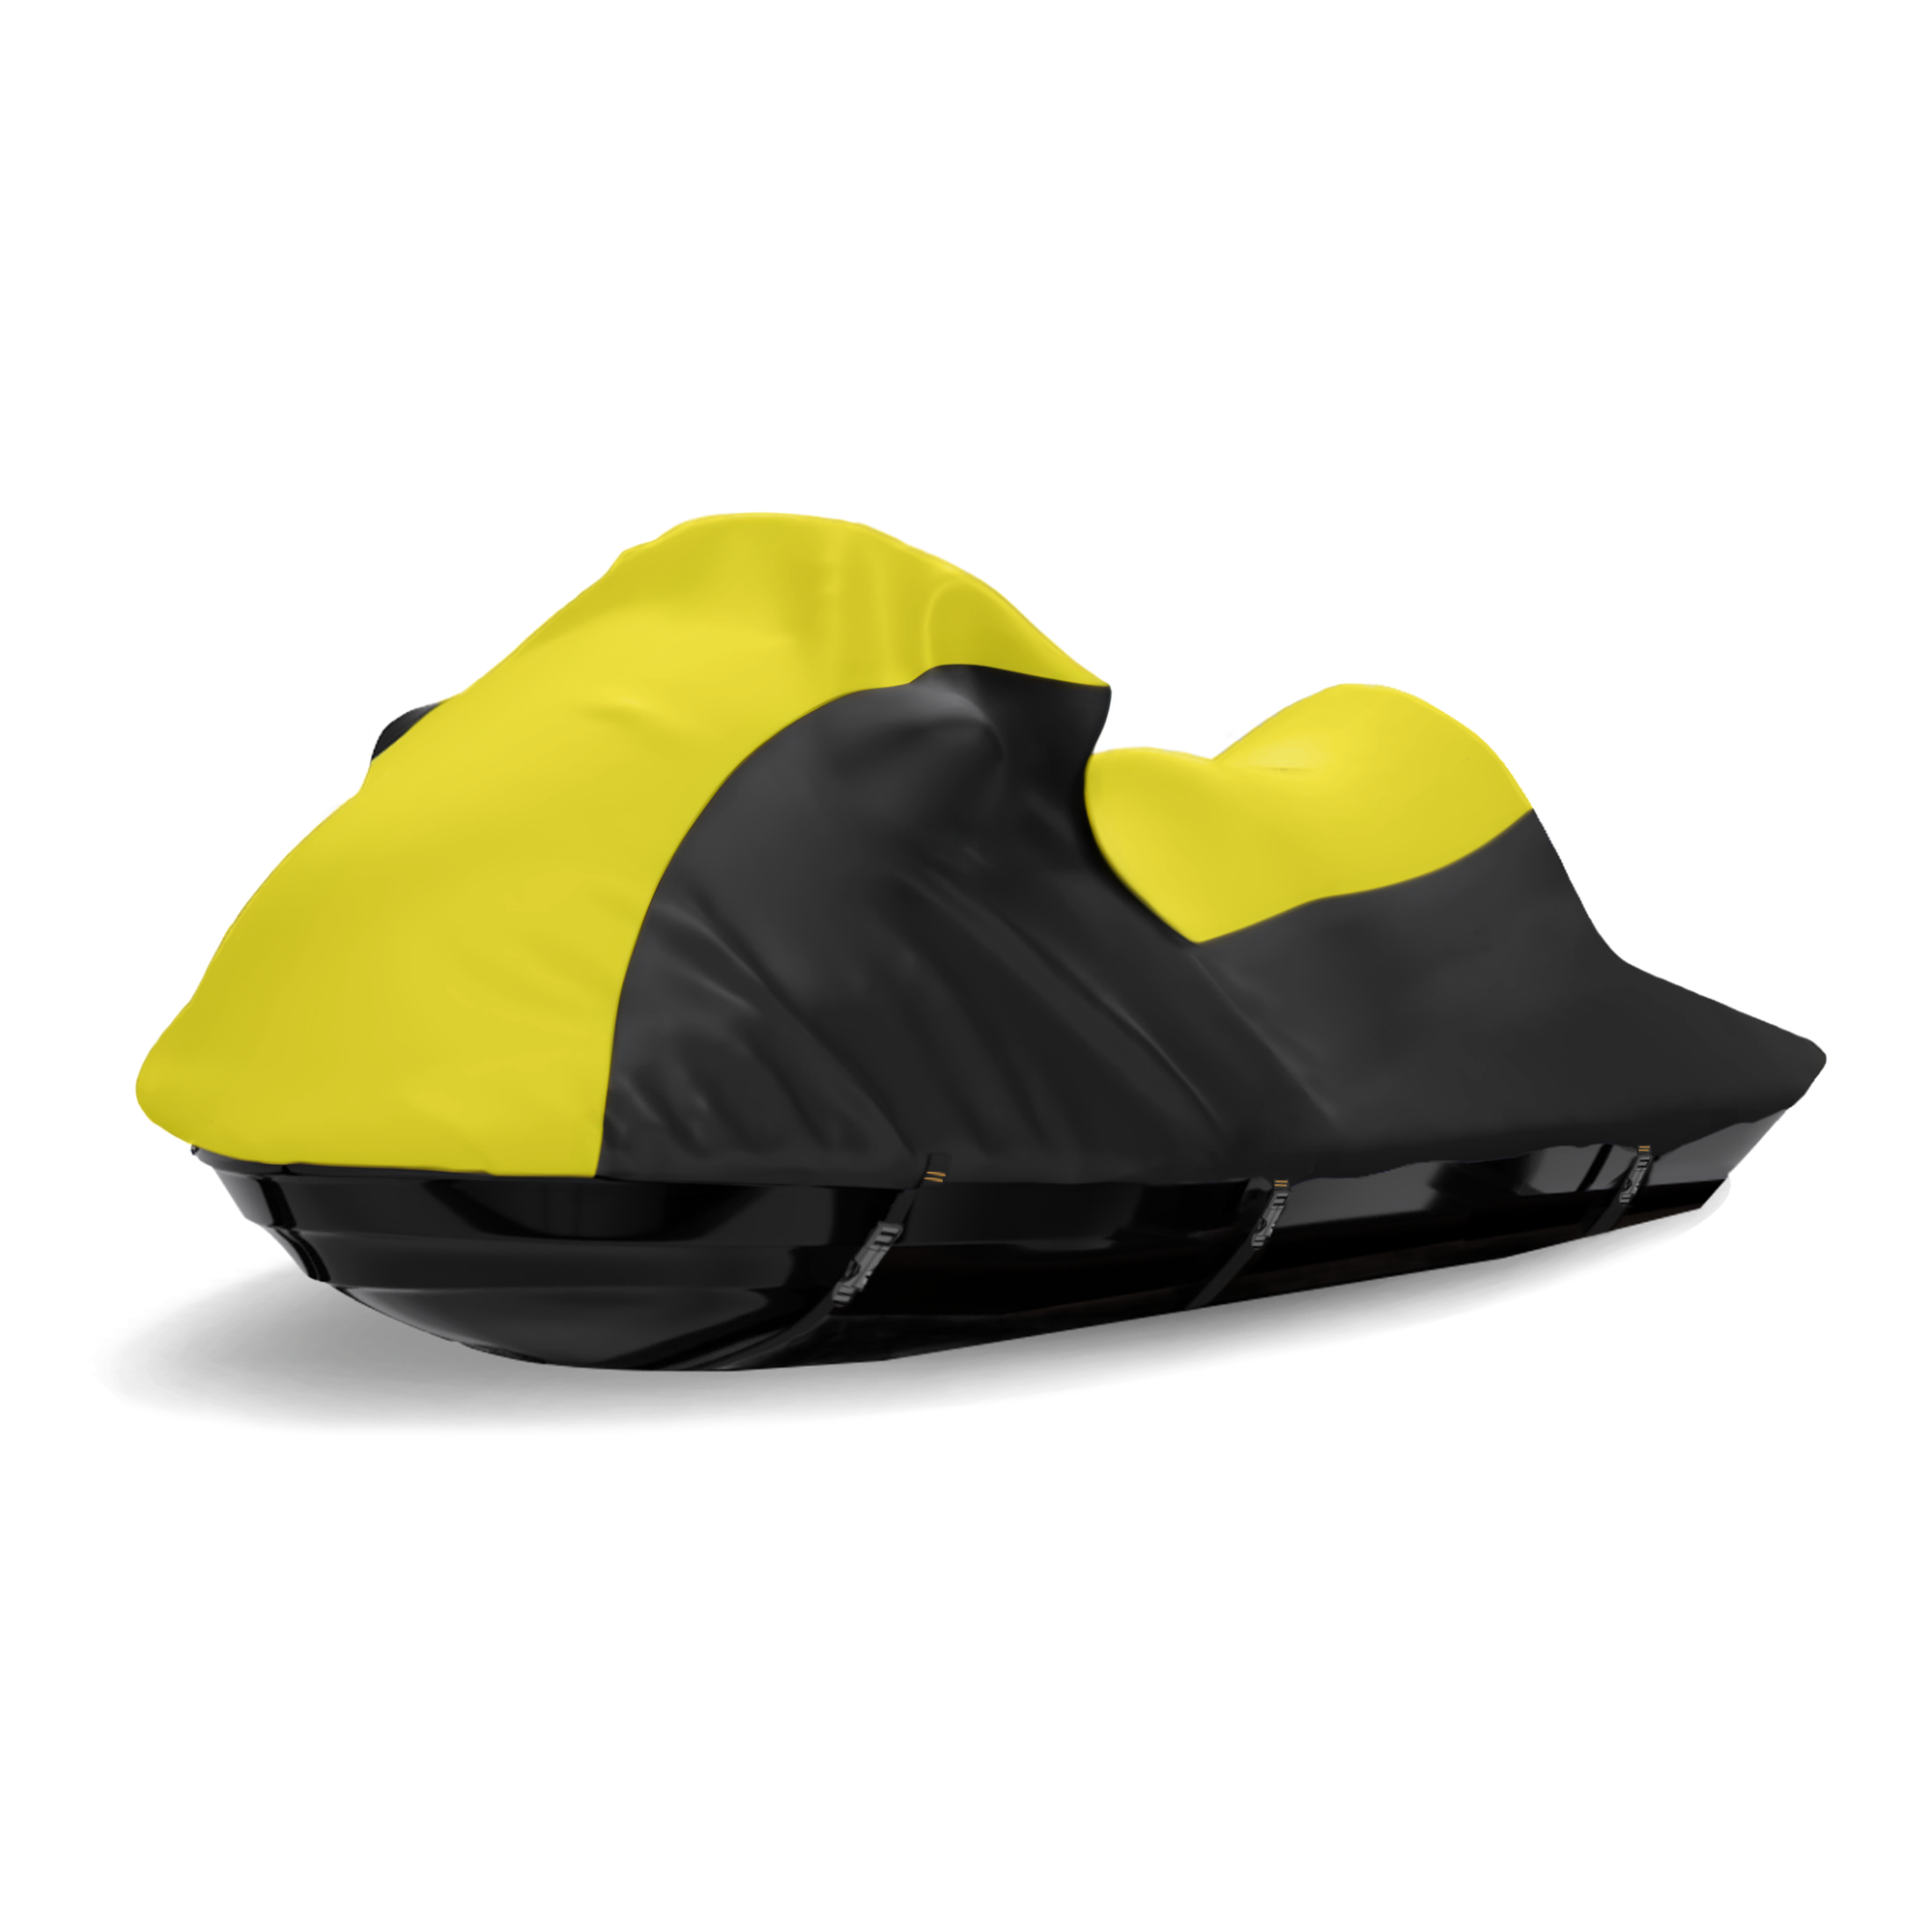 Weatherproof MAX Shield Jet Ski Cover (Trailerable) [Yellow / Black]